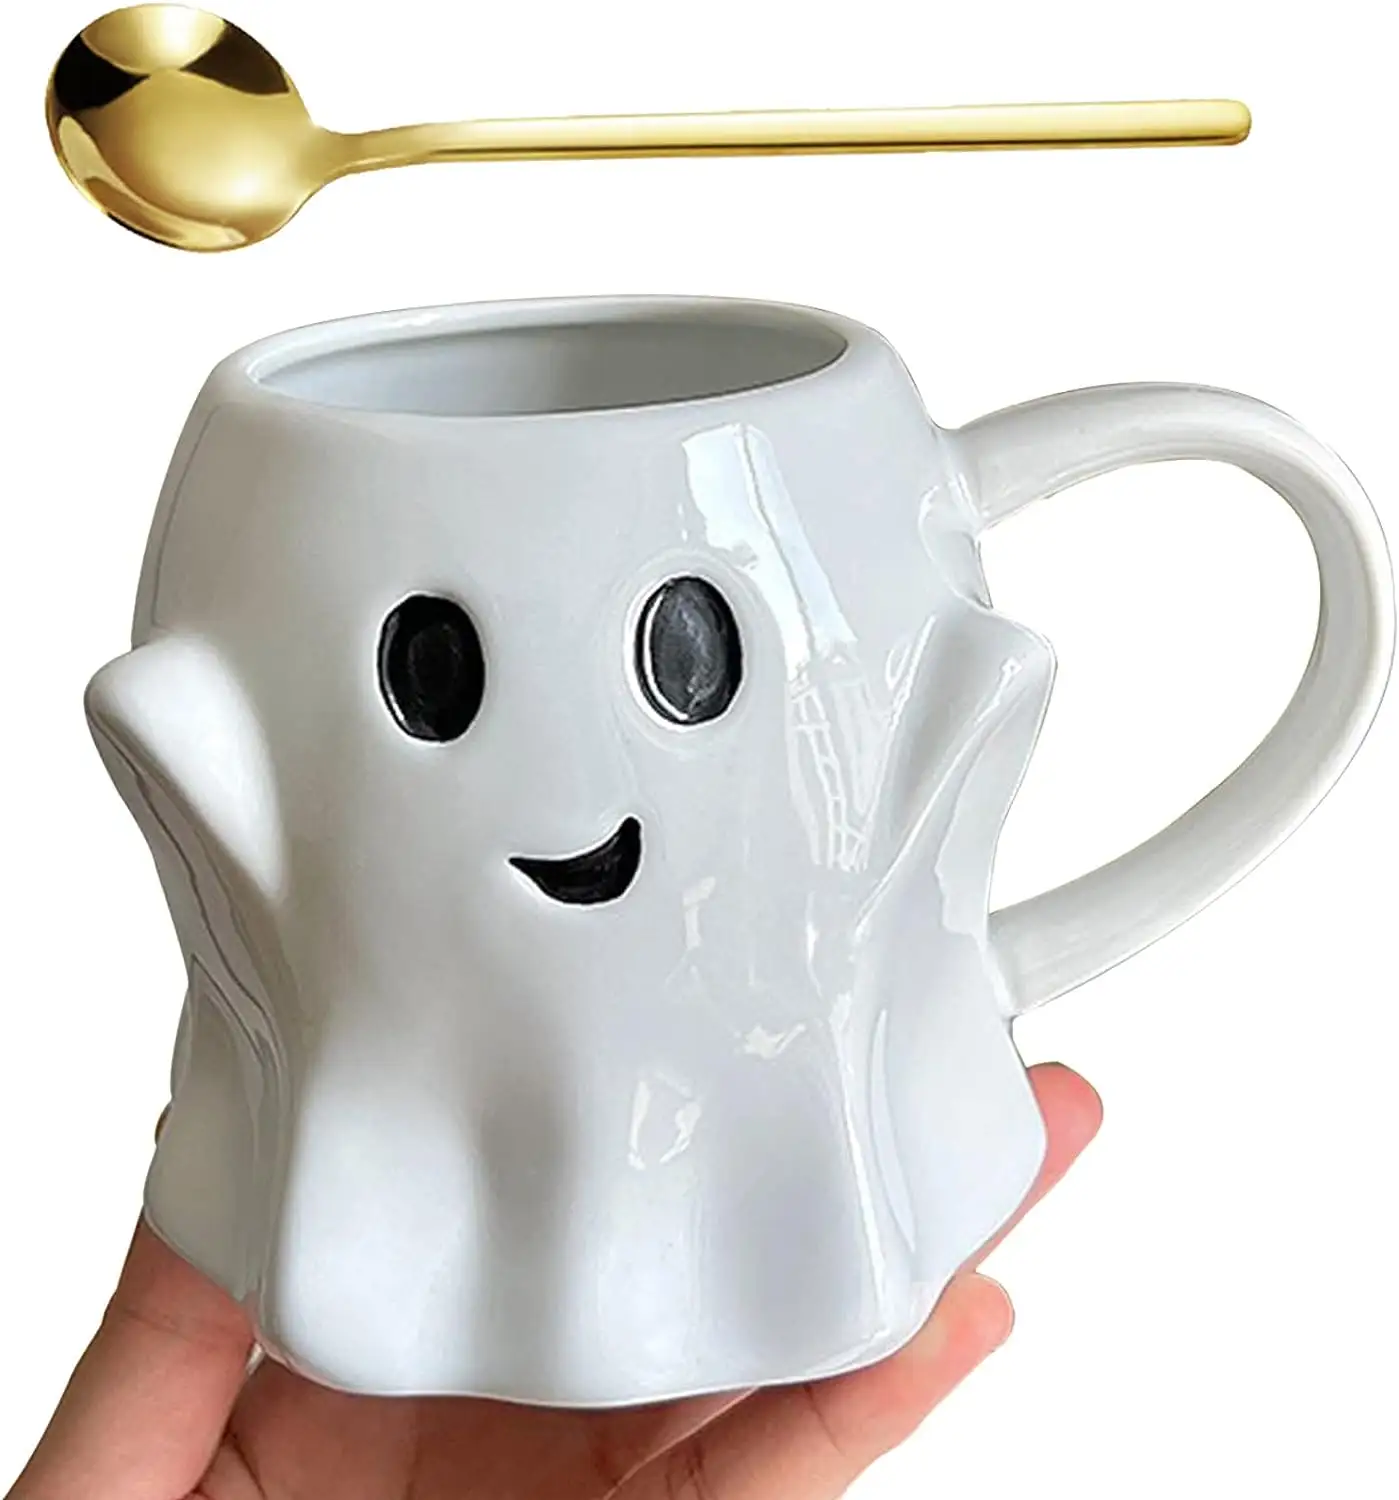 Ceramic Ghost Coffee Mug Ghostface Cups Halloween Theme Party Favor Fun Mugs Gift for Kids Women Men